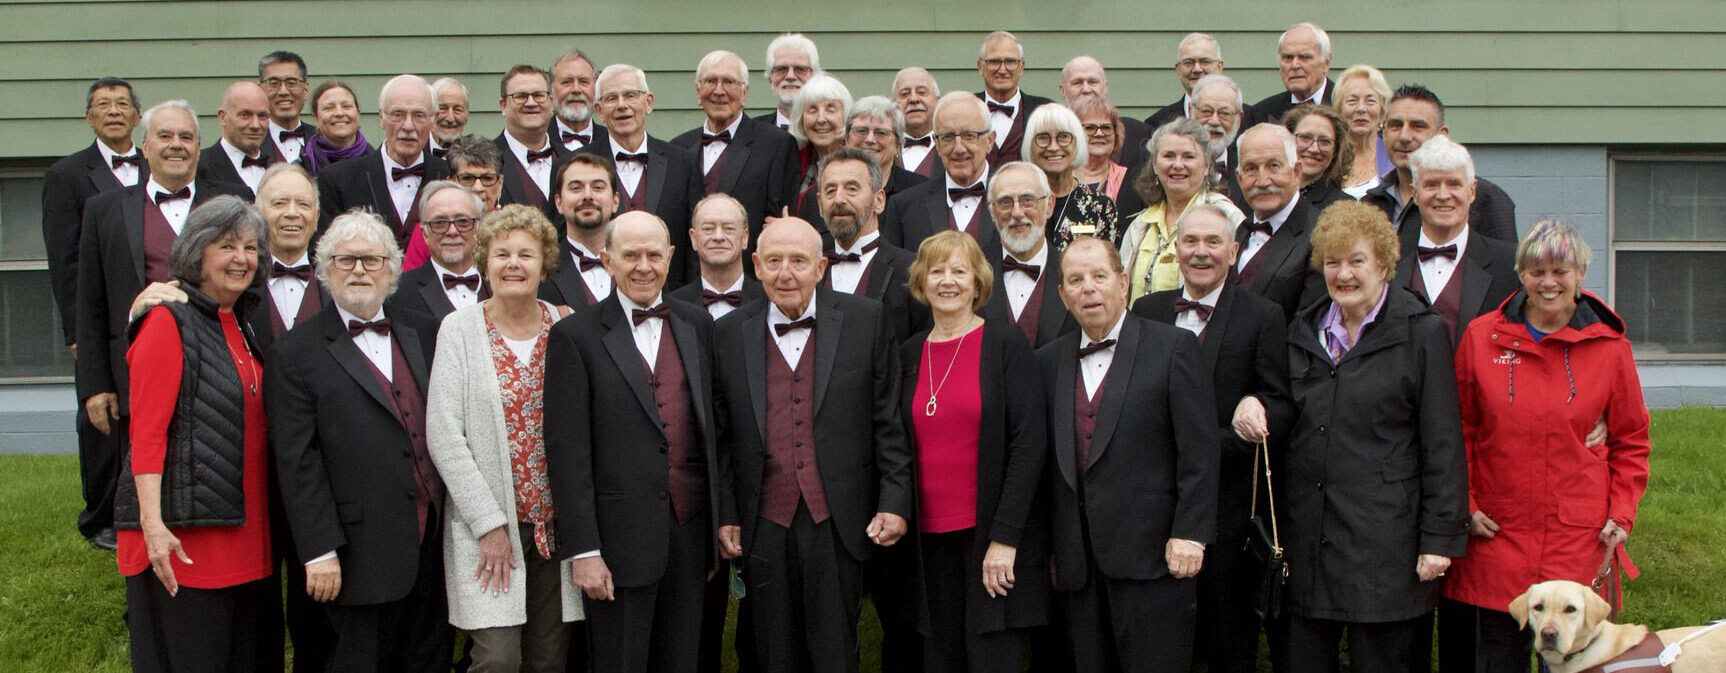 Vancouver Orpheus Male Choir